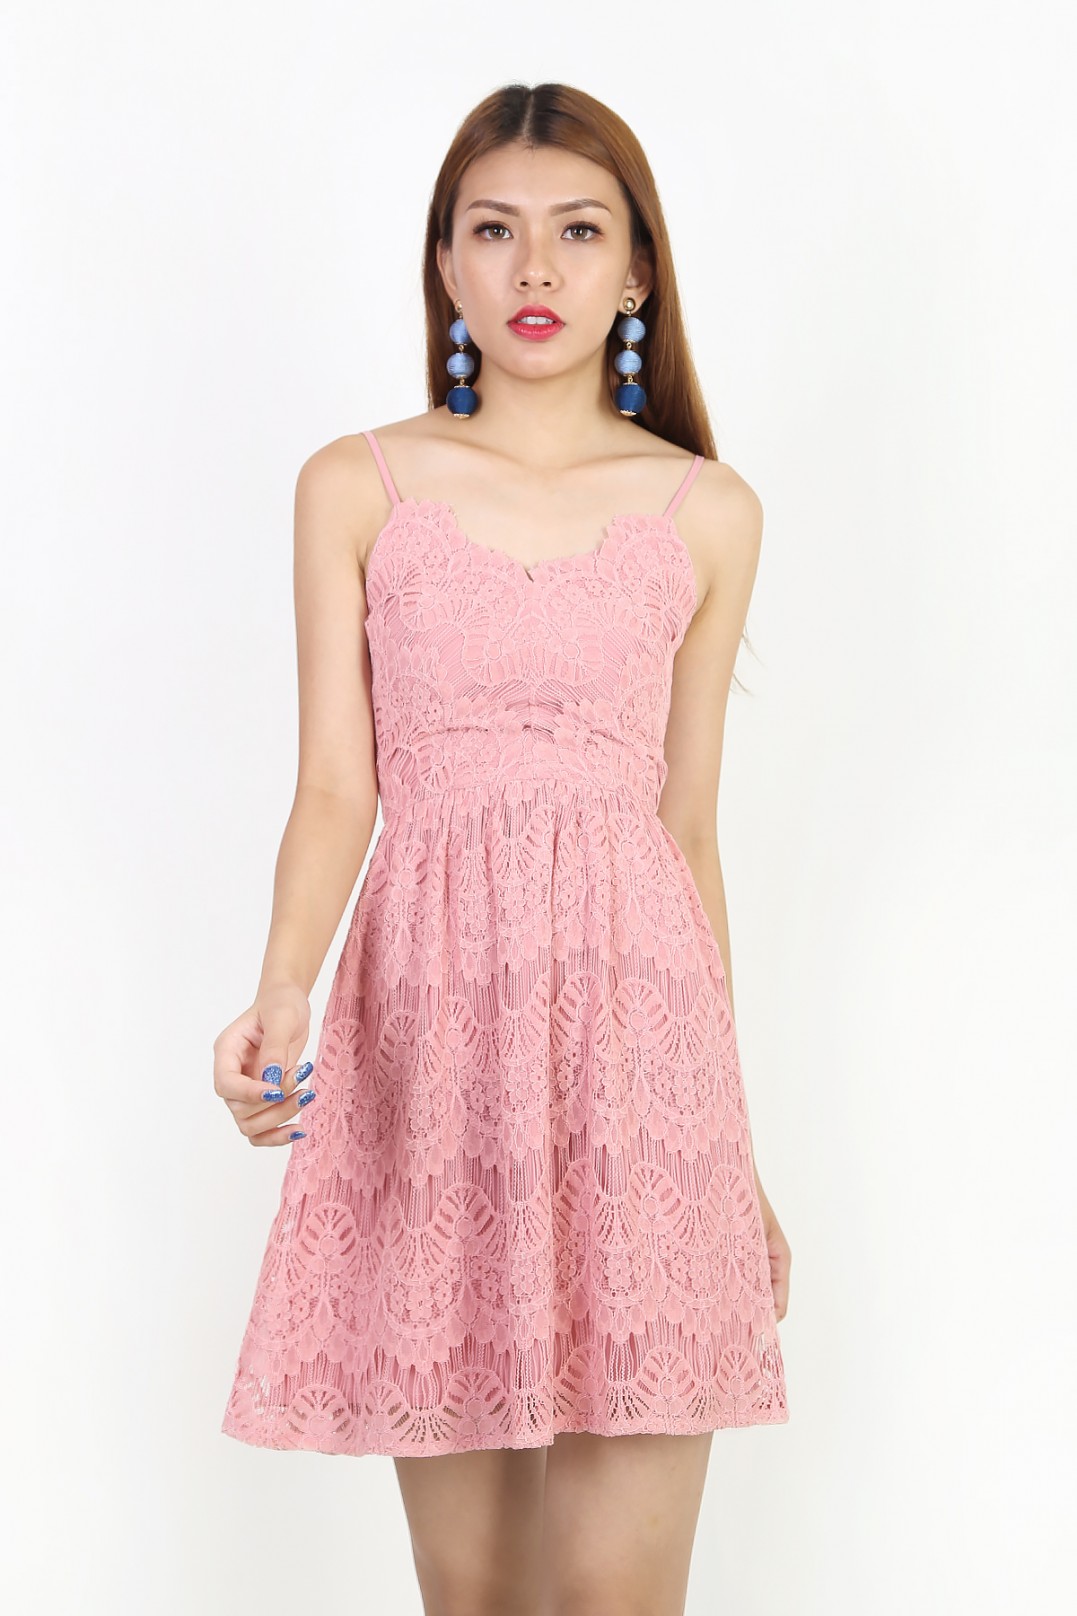 RESTOCK Robina  Lace Dress  in Pink MGP